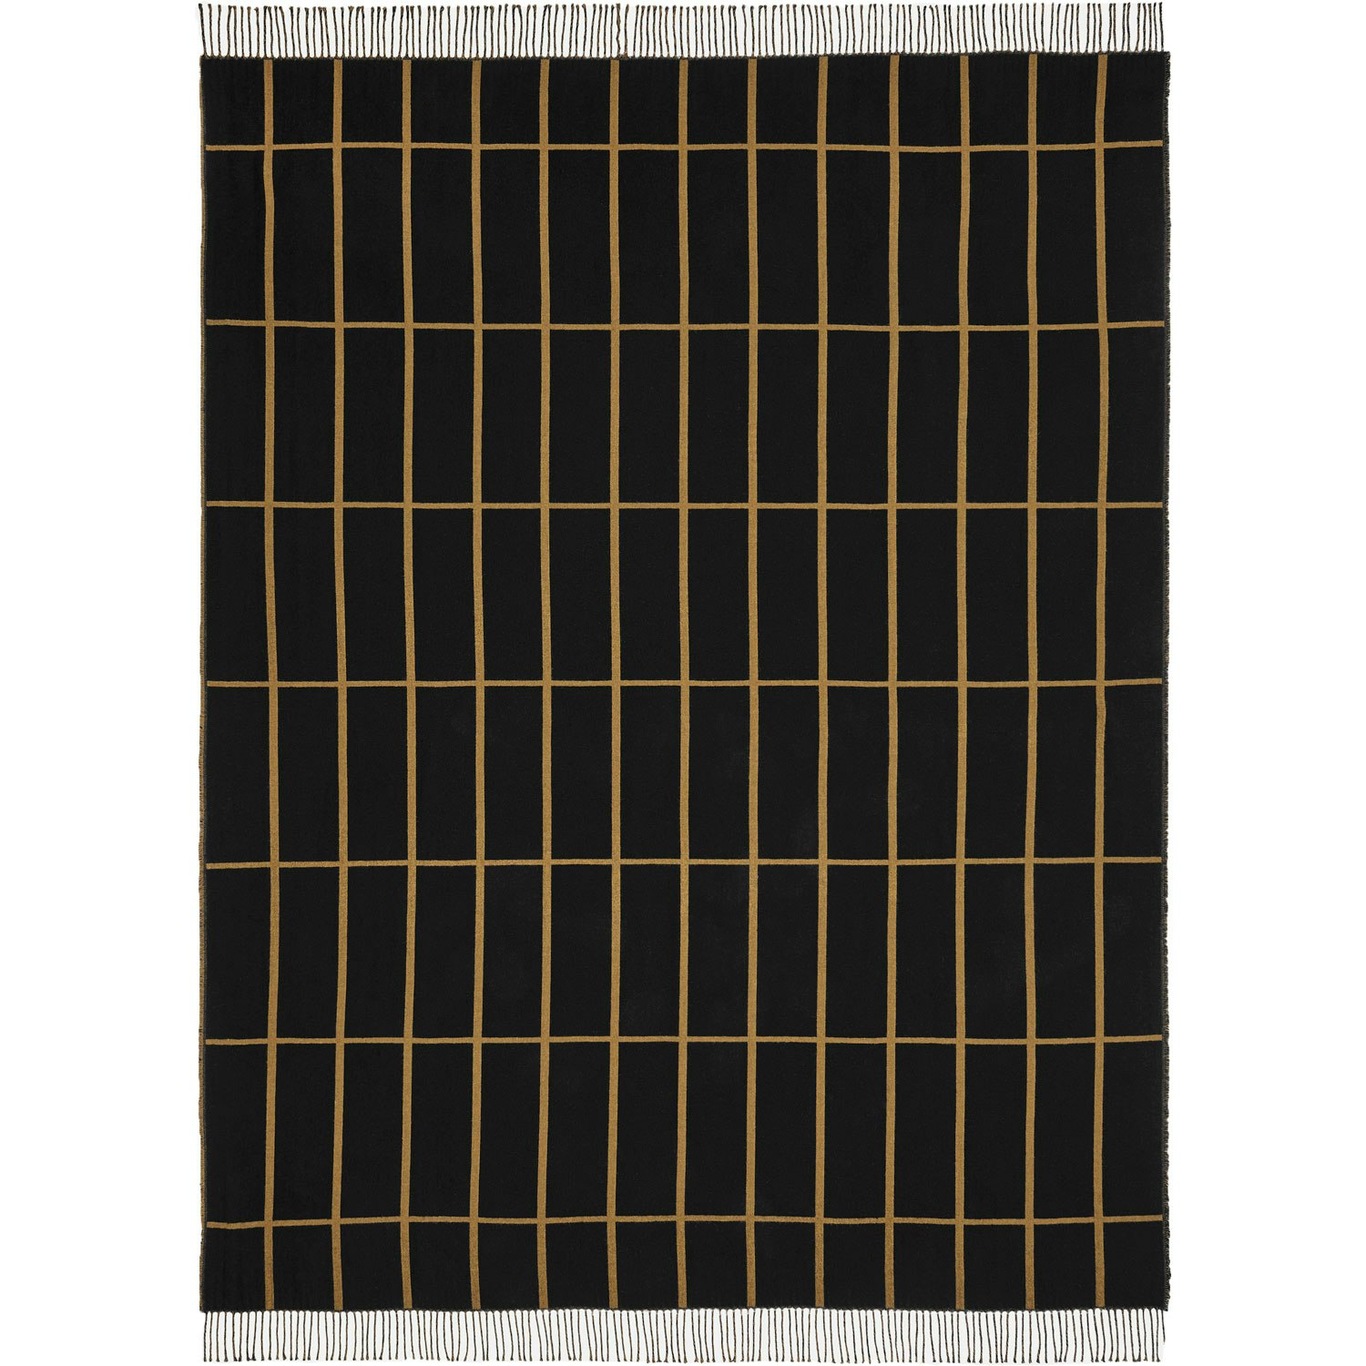 Tiiliskivi Throw 140x180 cm, Gold / Caviar